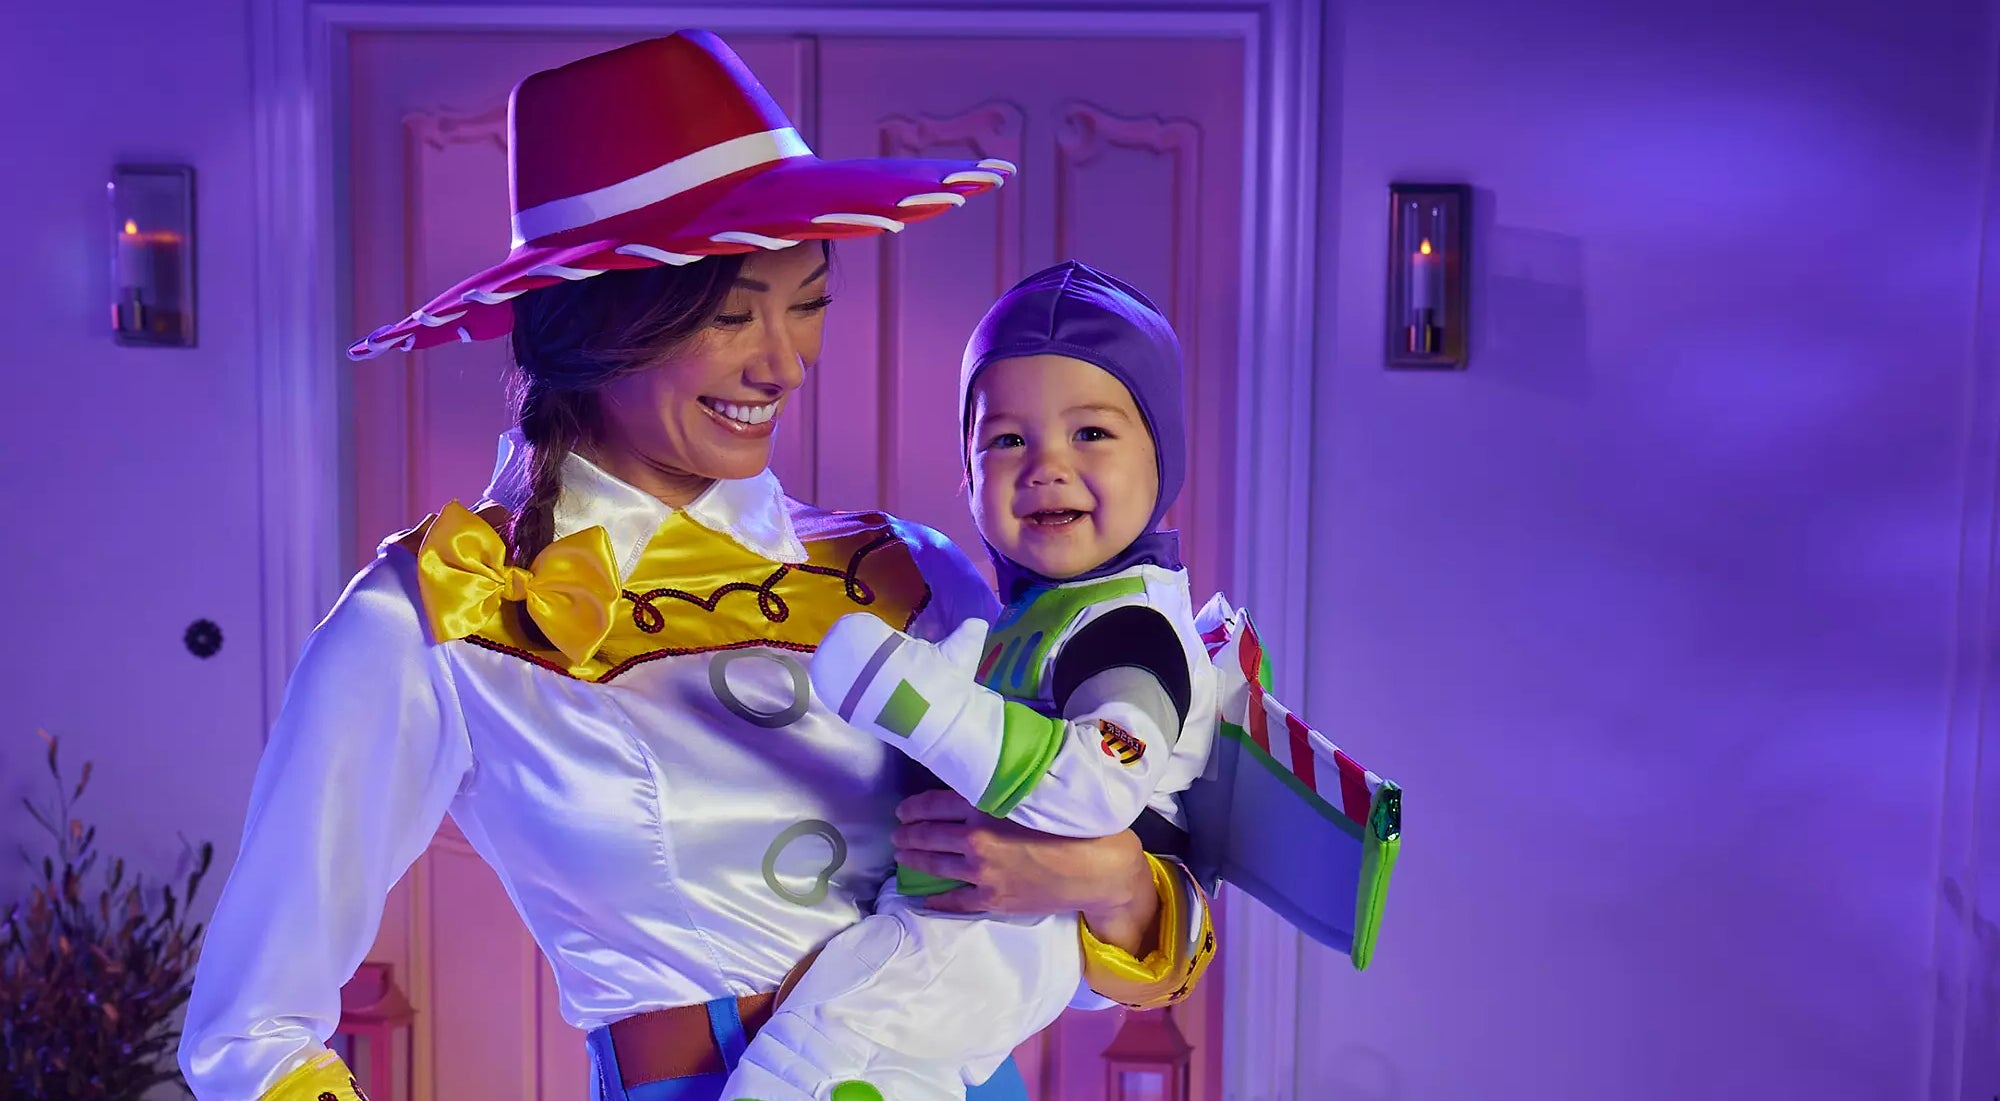 Child's Disney Deluxe Toy Story 4 Buzz Lightyear Costume